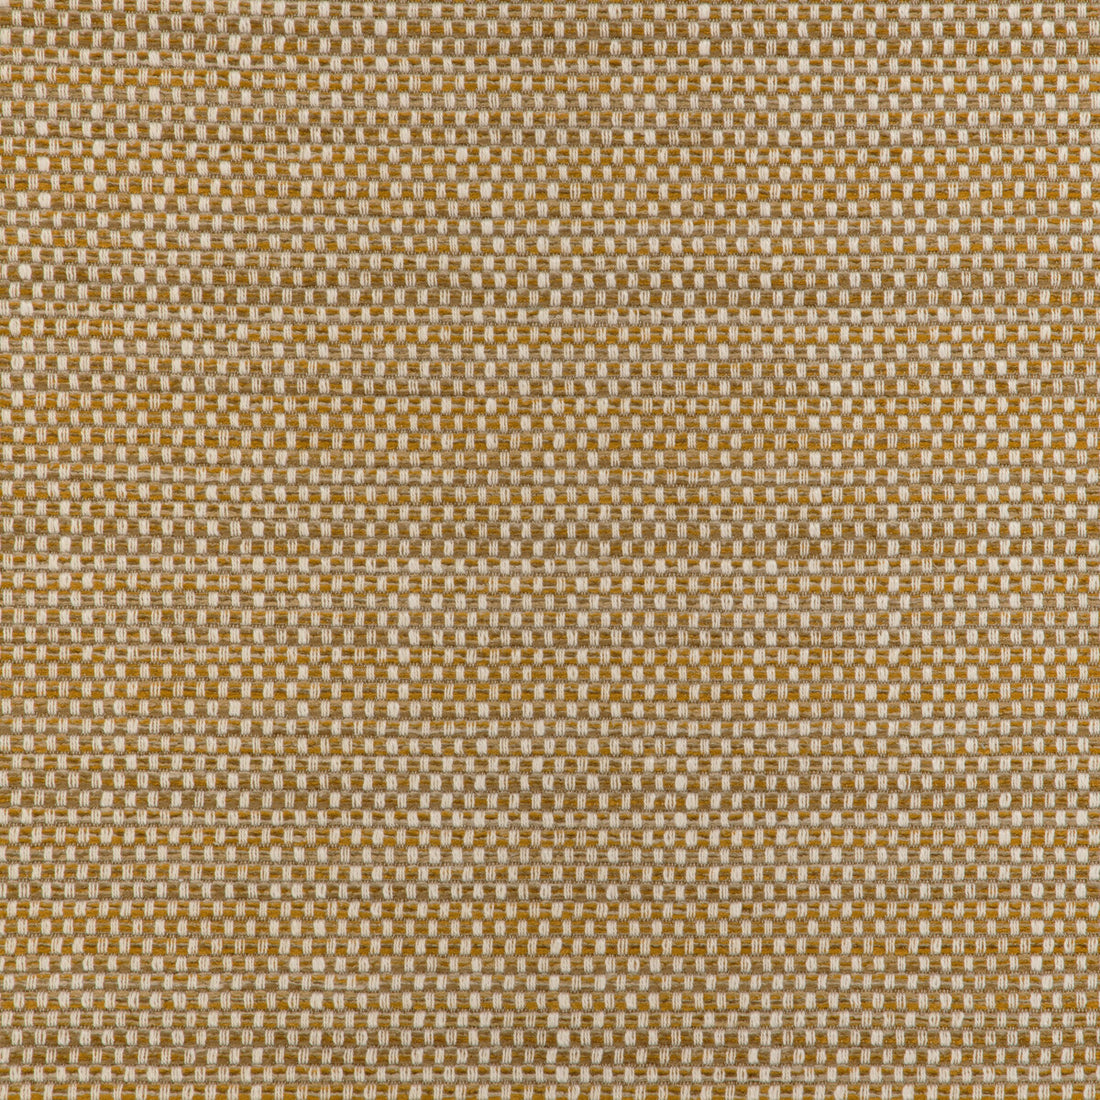 Kravet Smart fabric in 36994-4 color - pattern 36994.4.0 - by Kravet Smart in the Pavilion collection